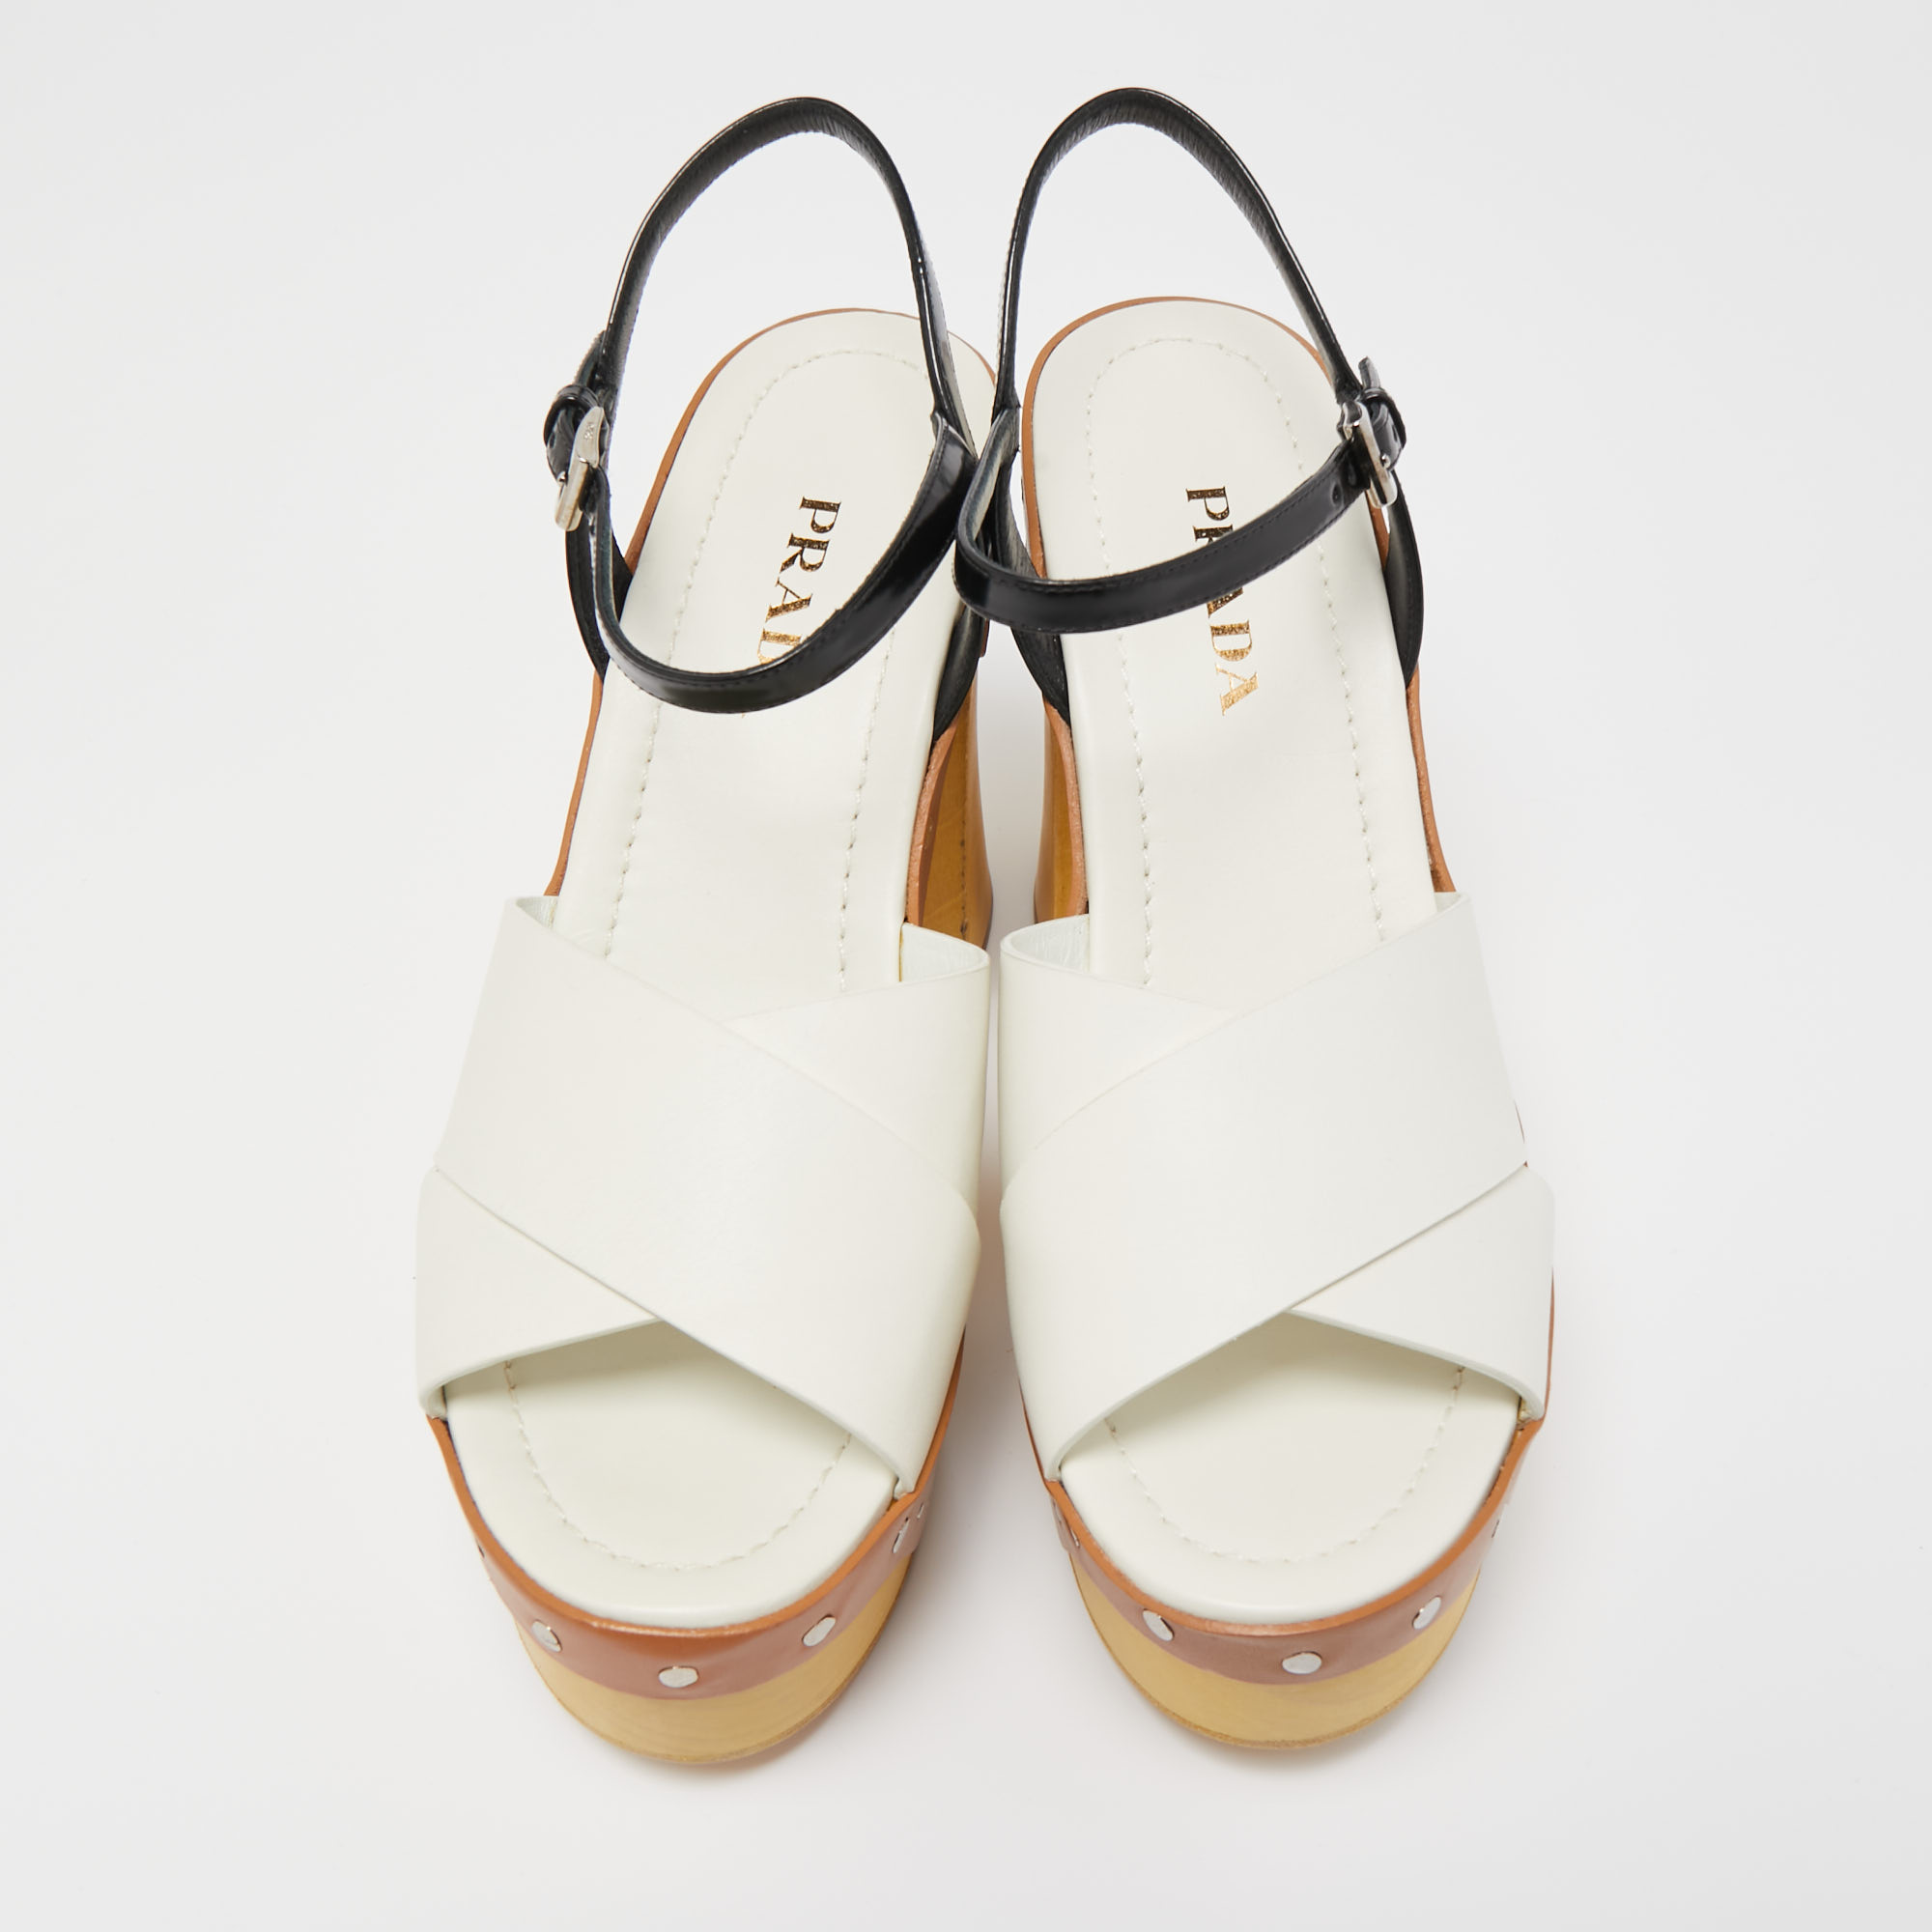 Prada White/Black Leather Studded Platform Block Heel Ankle Strap Sandals Size 40